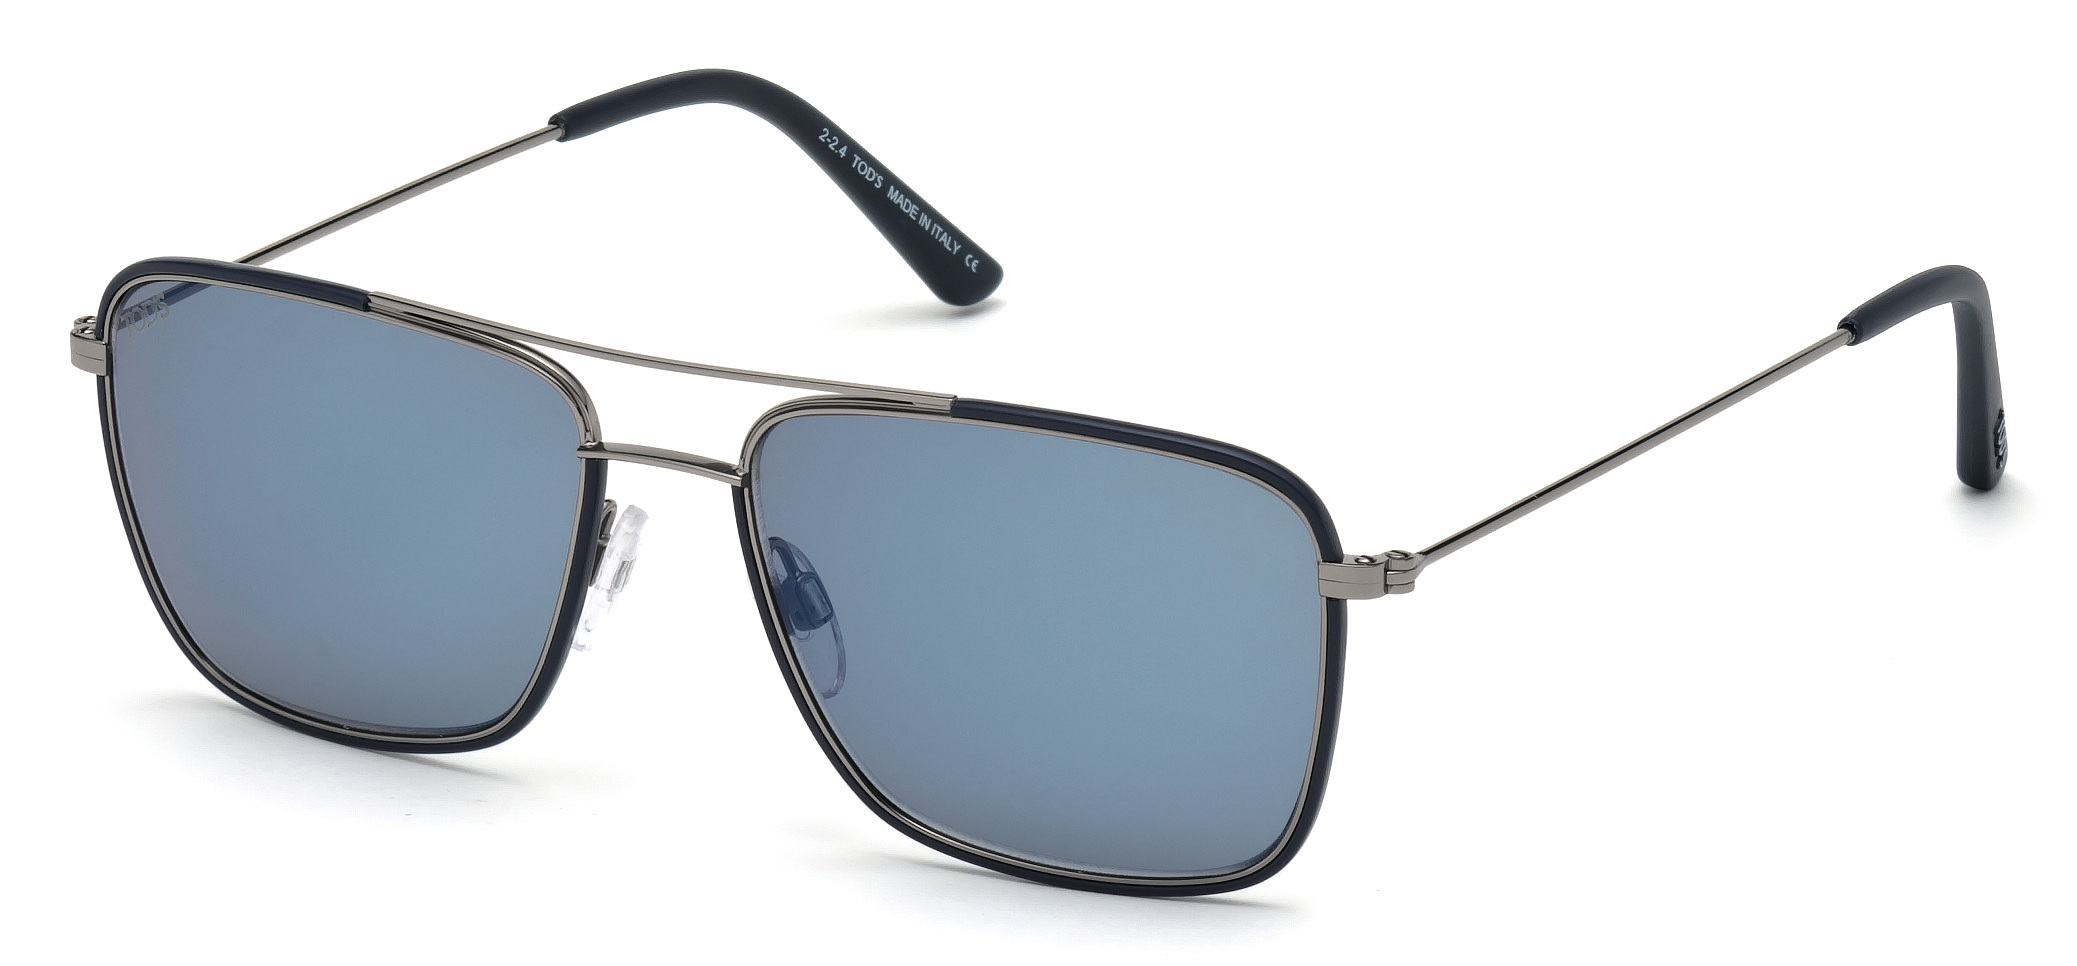 Marcolin Eyewear sunglasses Tods Eyewear FW 15 16 3